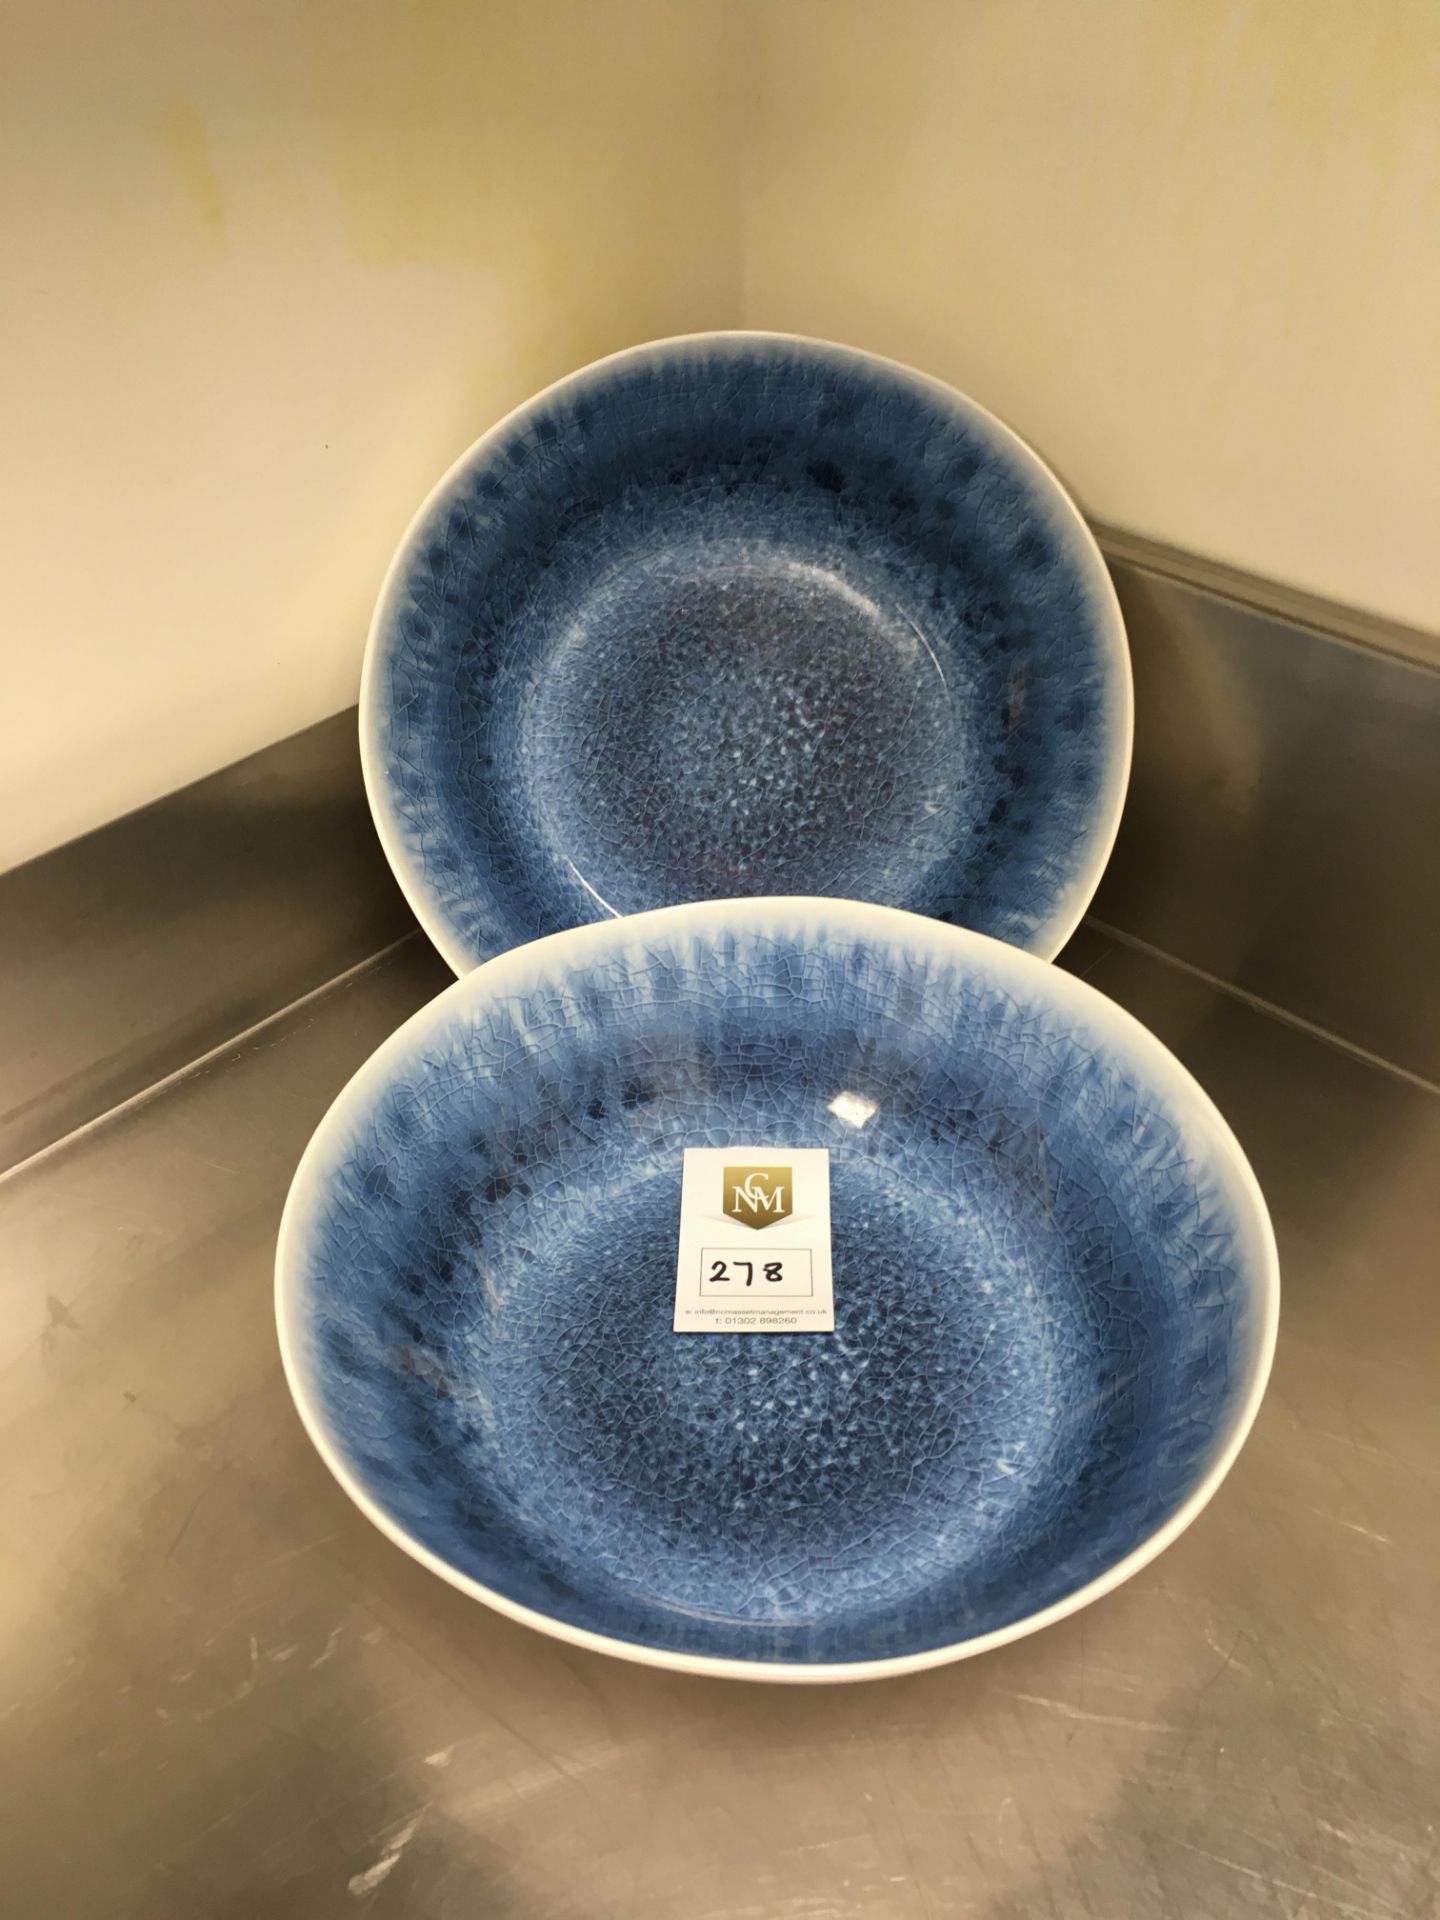 2 x Melamine Bowls